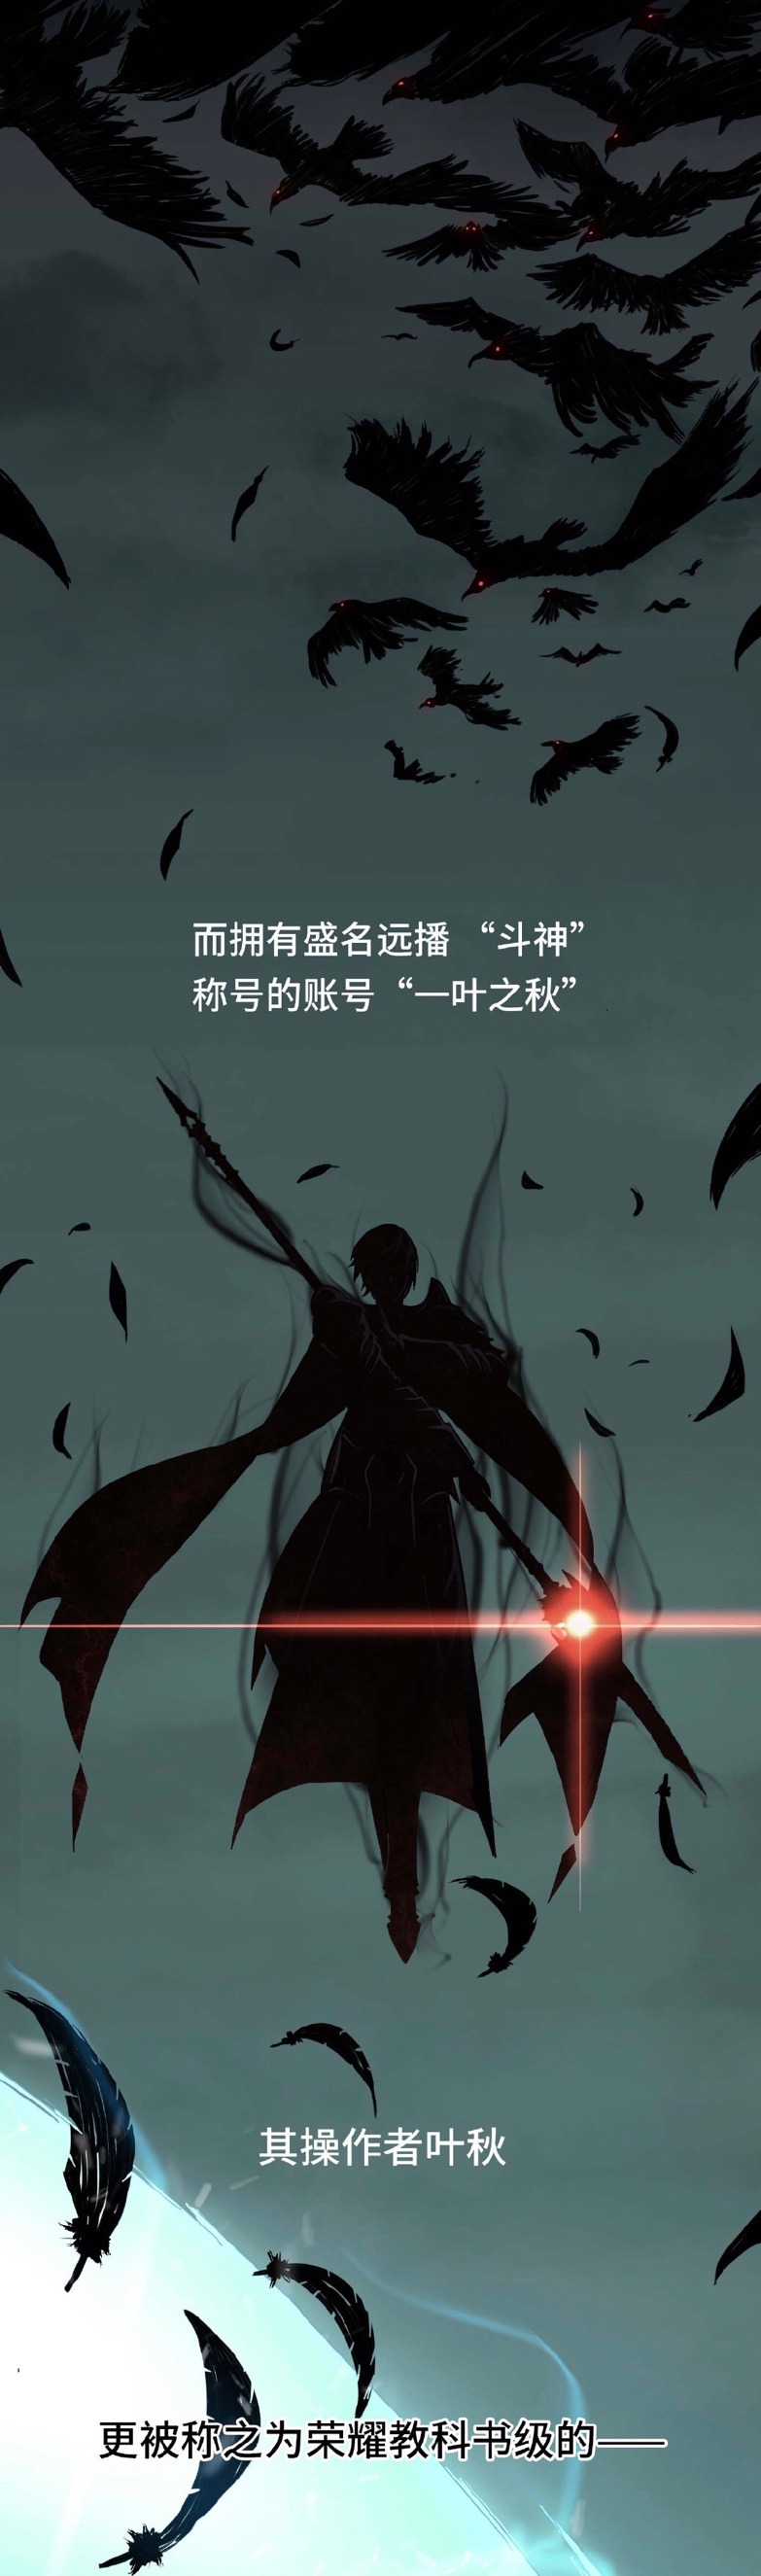 Assistir Quan Zhi Gao Shou (The King's Avatar) - Episódio 09